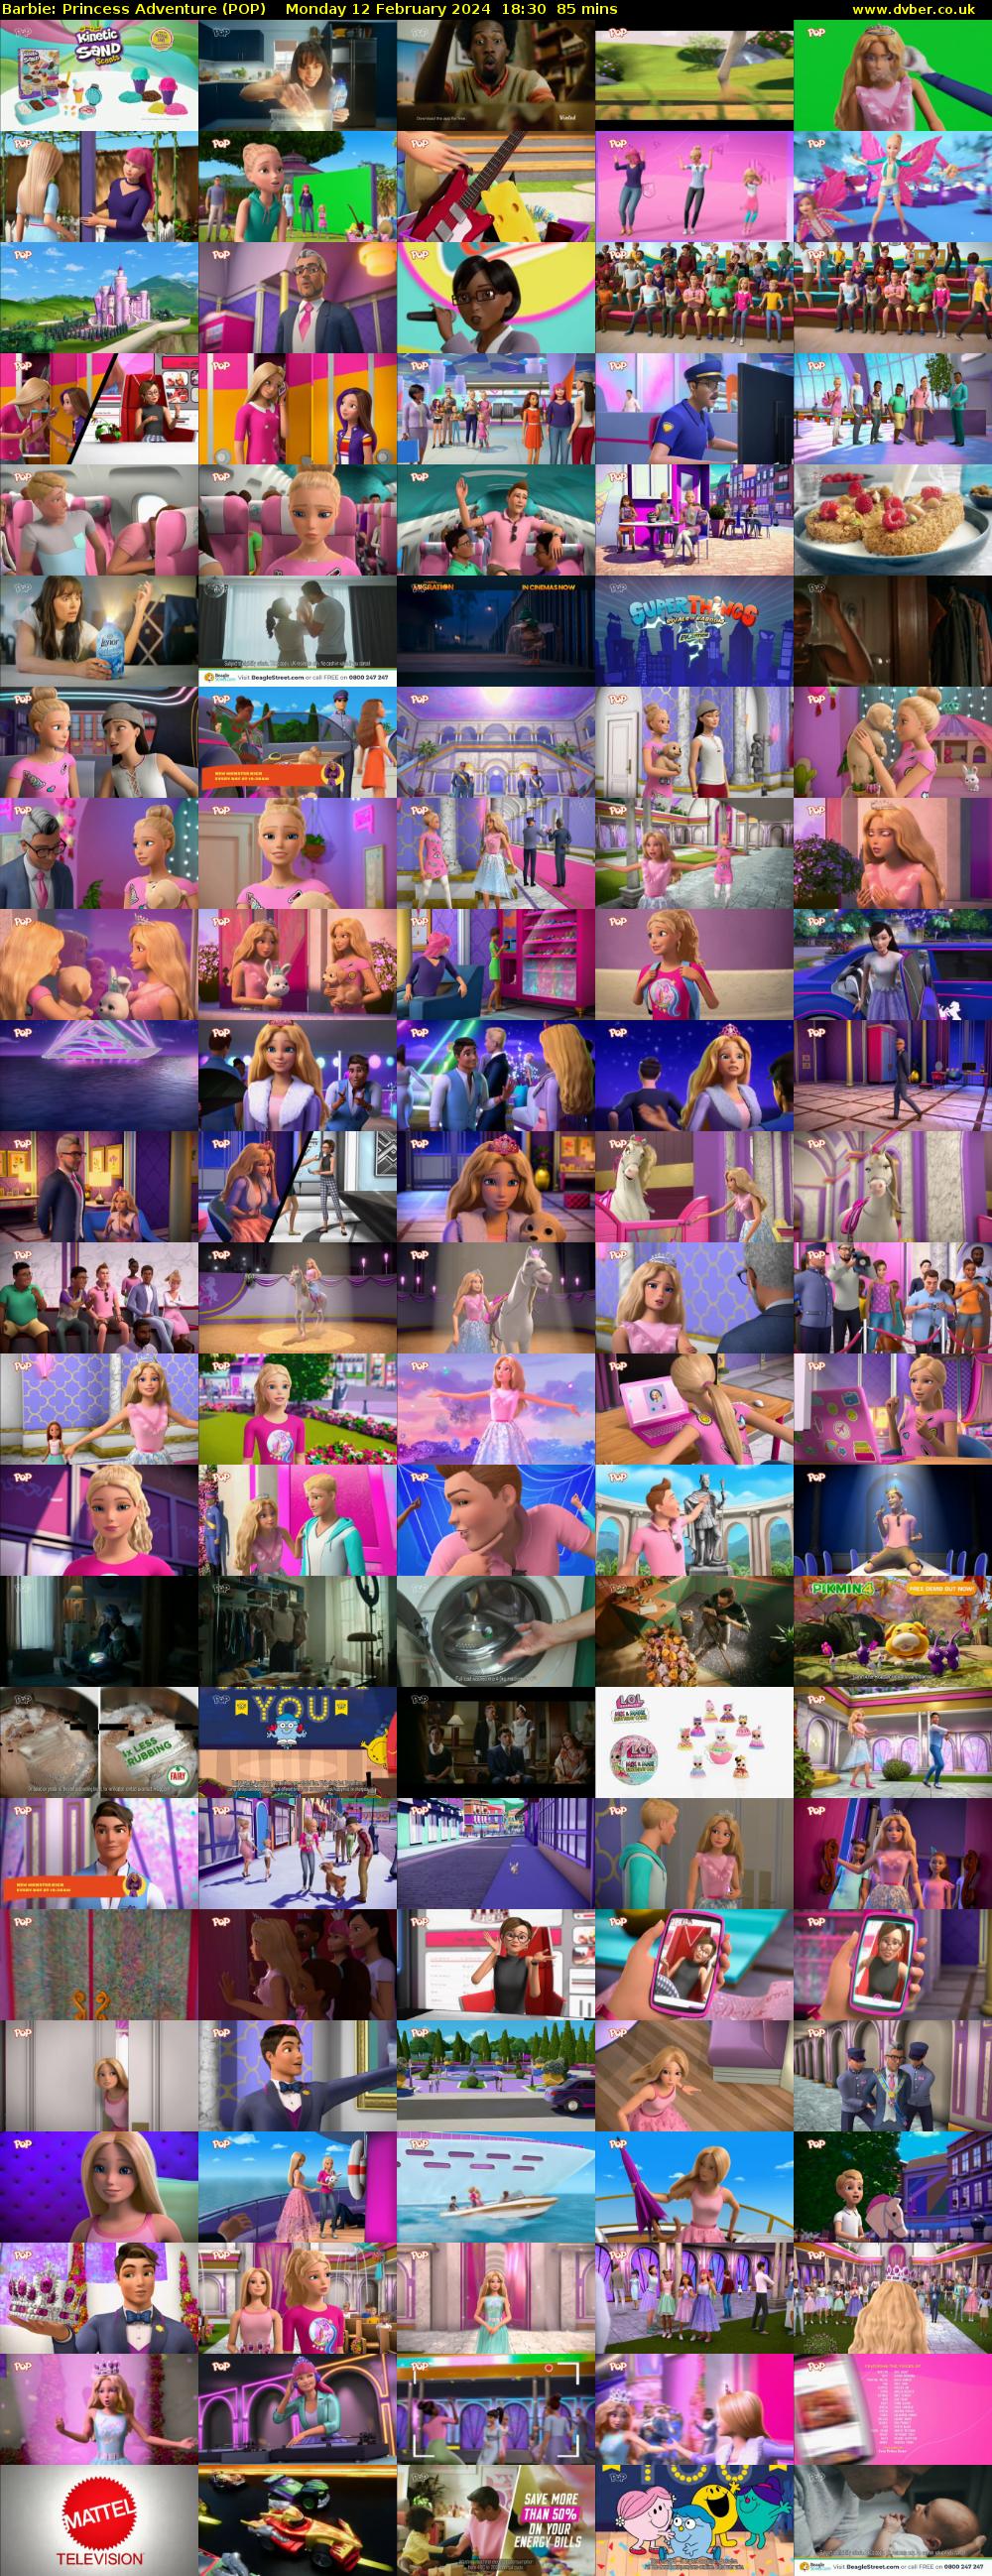 Barbie: Princess Adventure (POP) Monday 12 February 2024 18:30 - 19:55